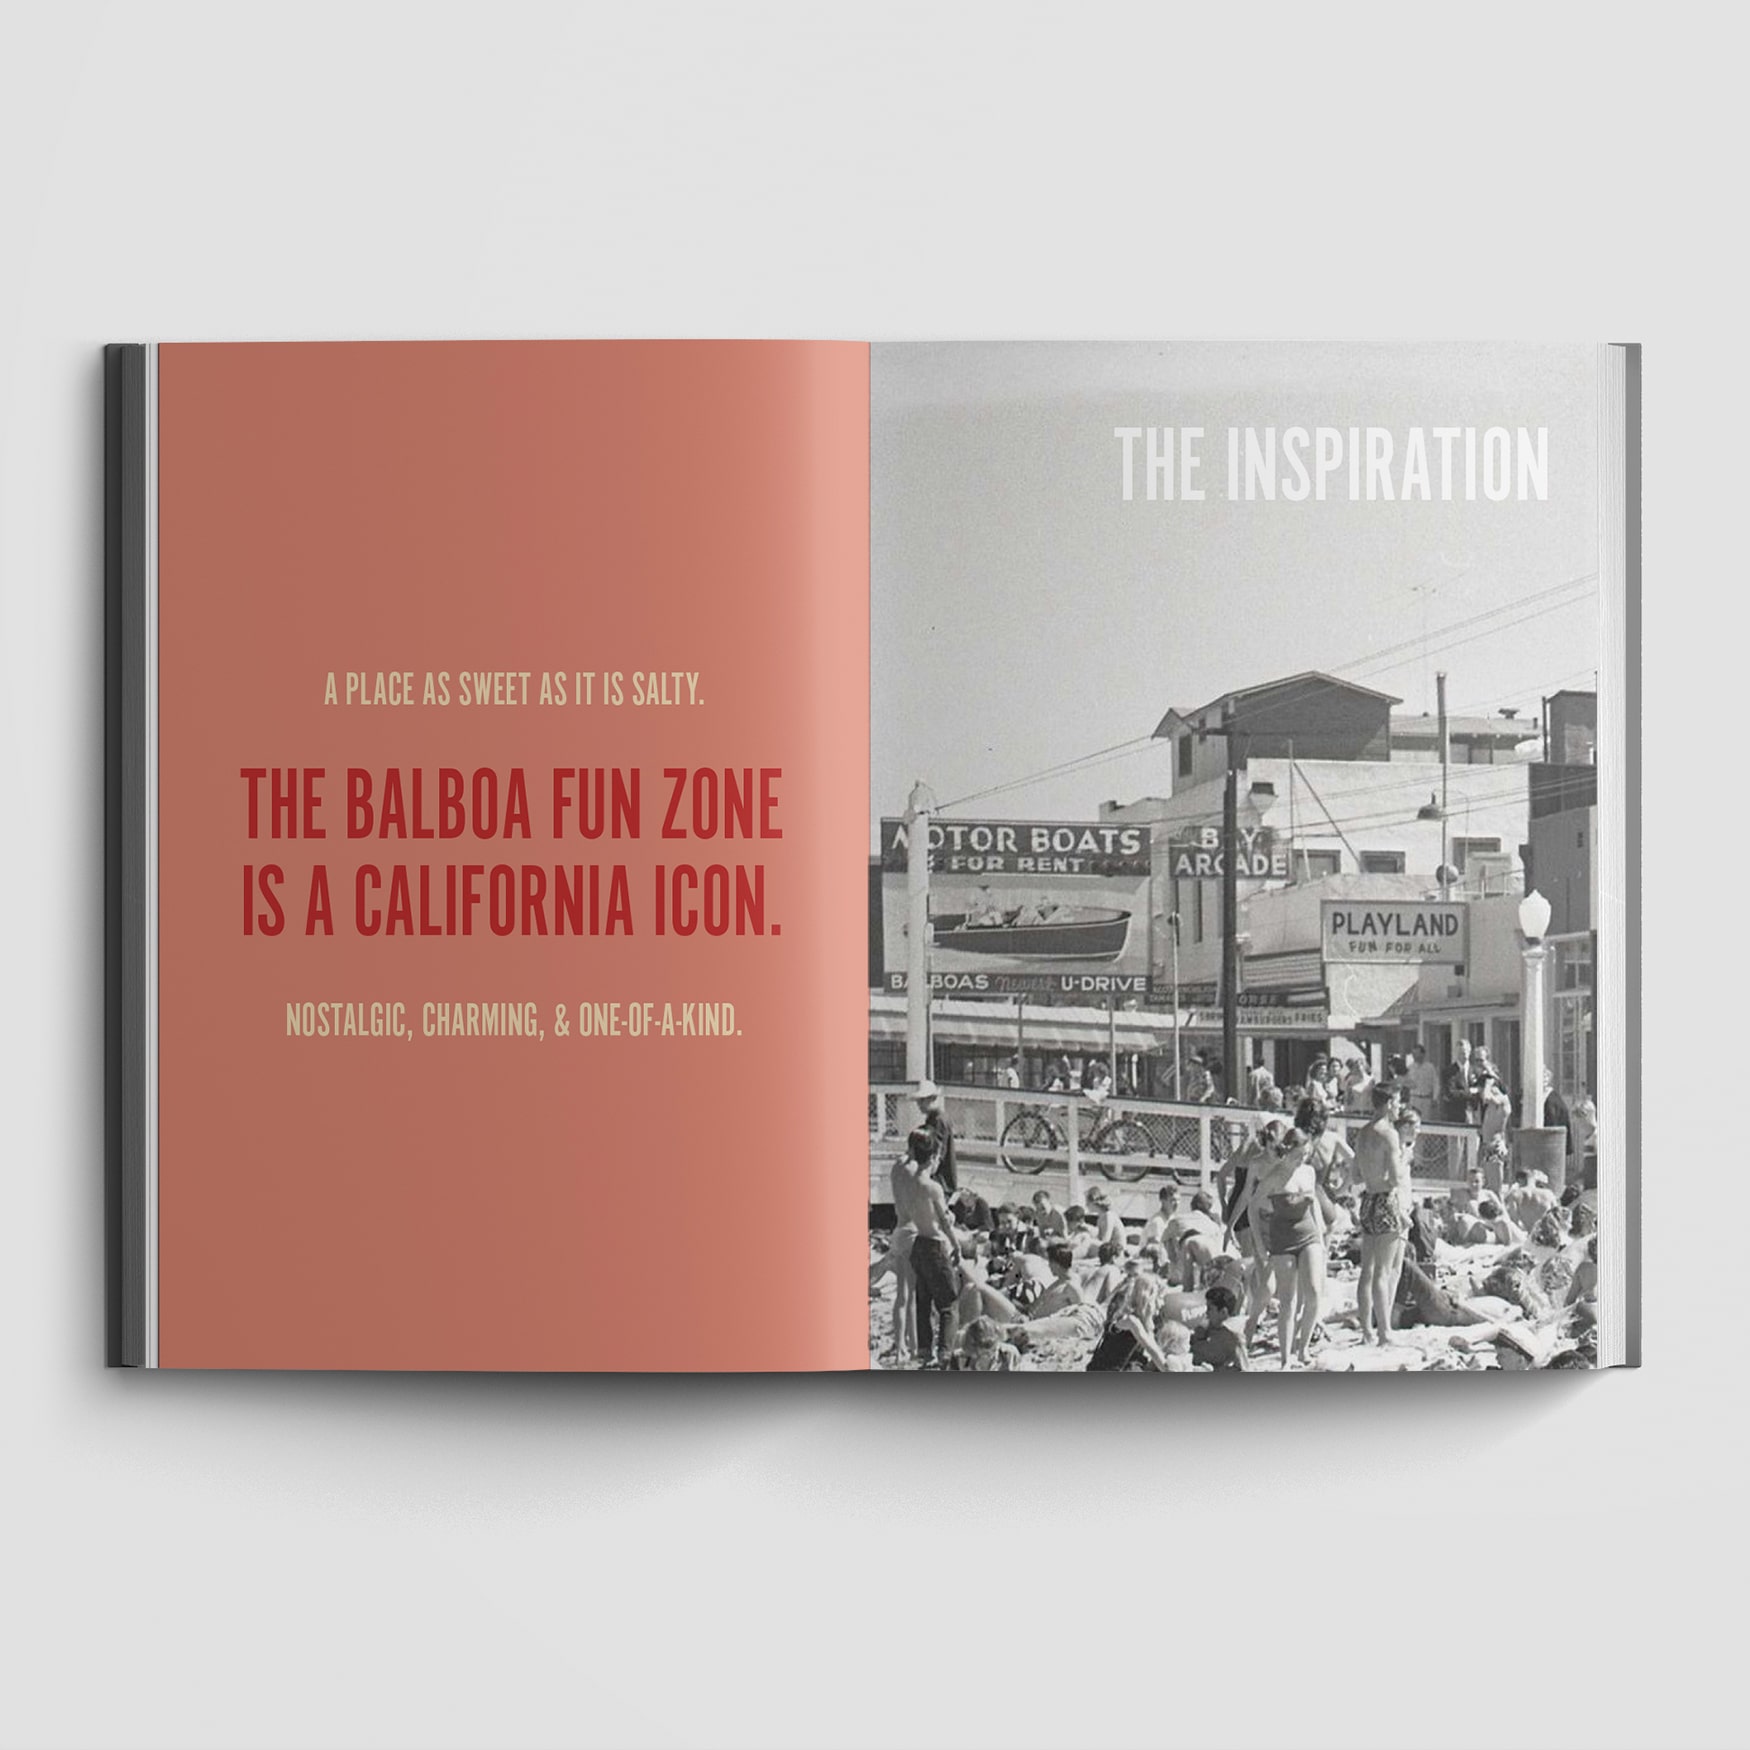 A book open to a spread of the inspiration of the Balboa Fun Zone in Newport Beach, California. The Fun Zone is a nostalgic, charming California icon.